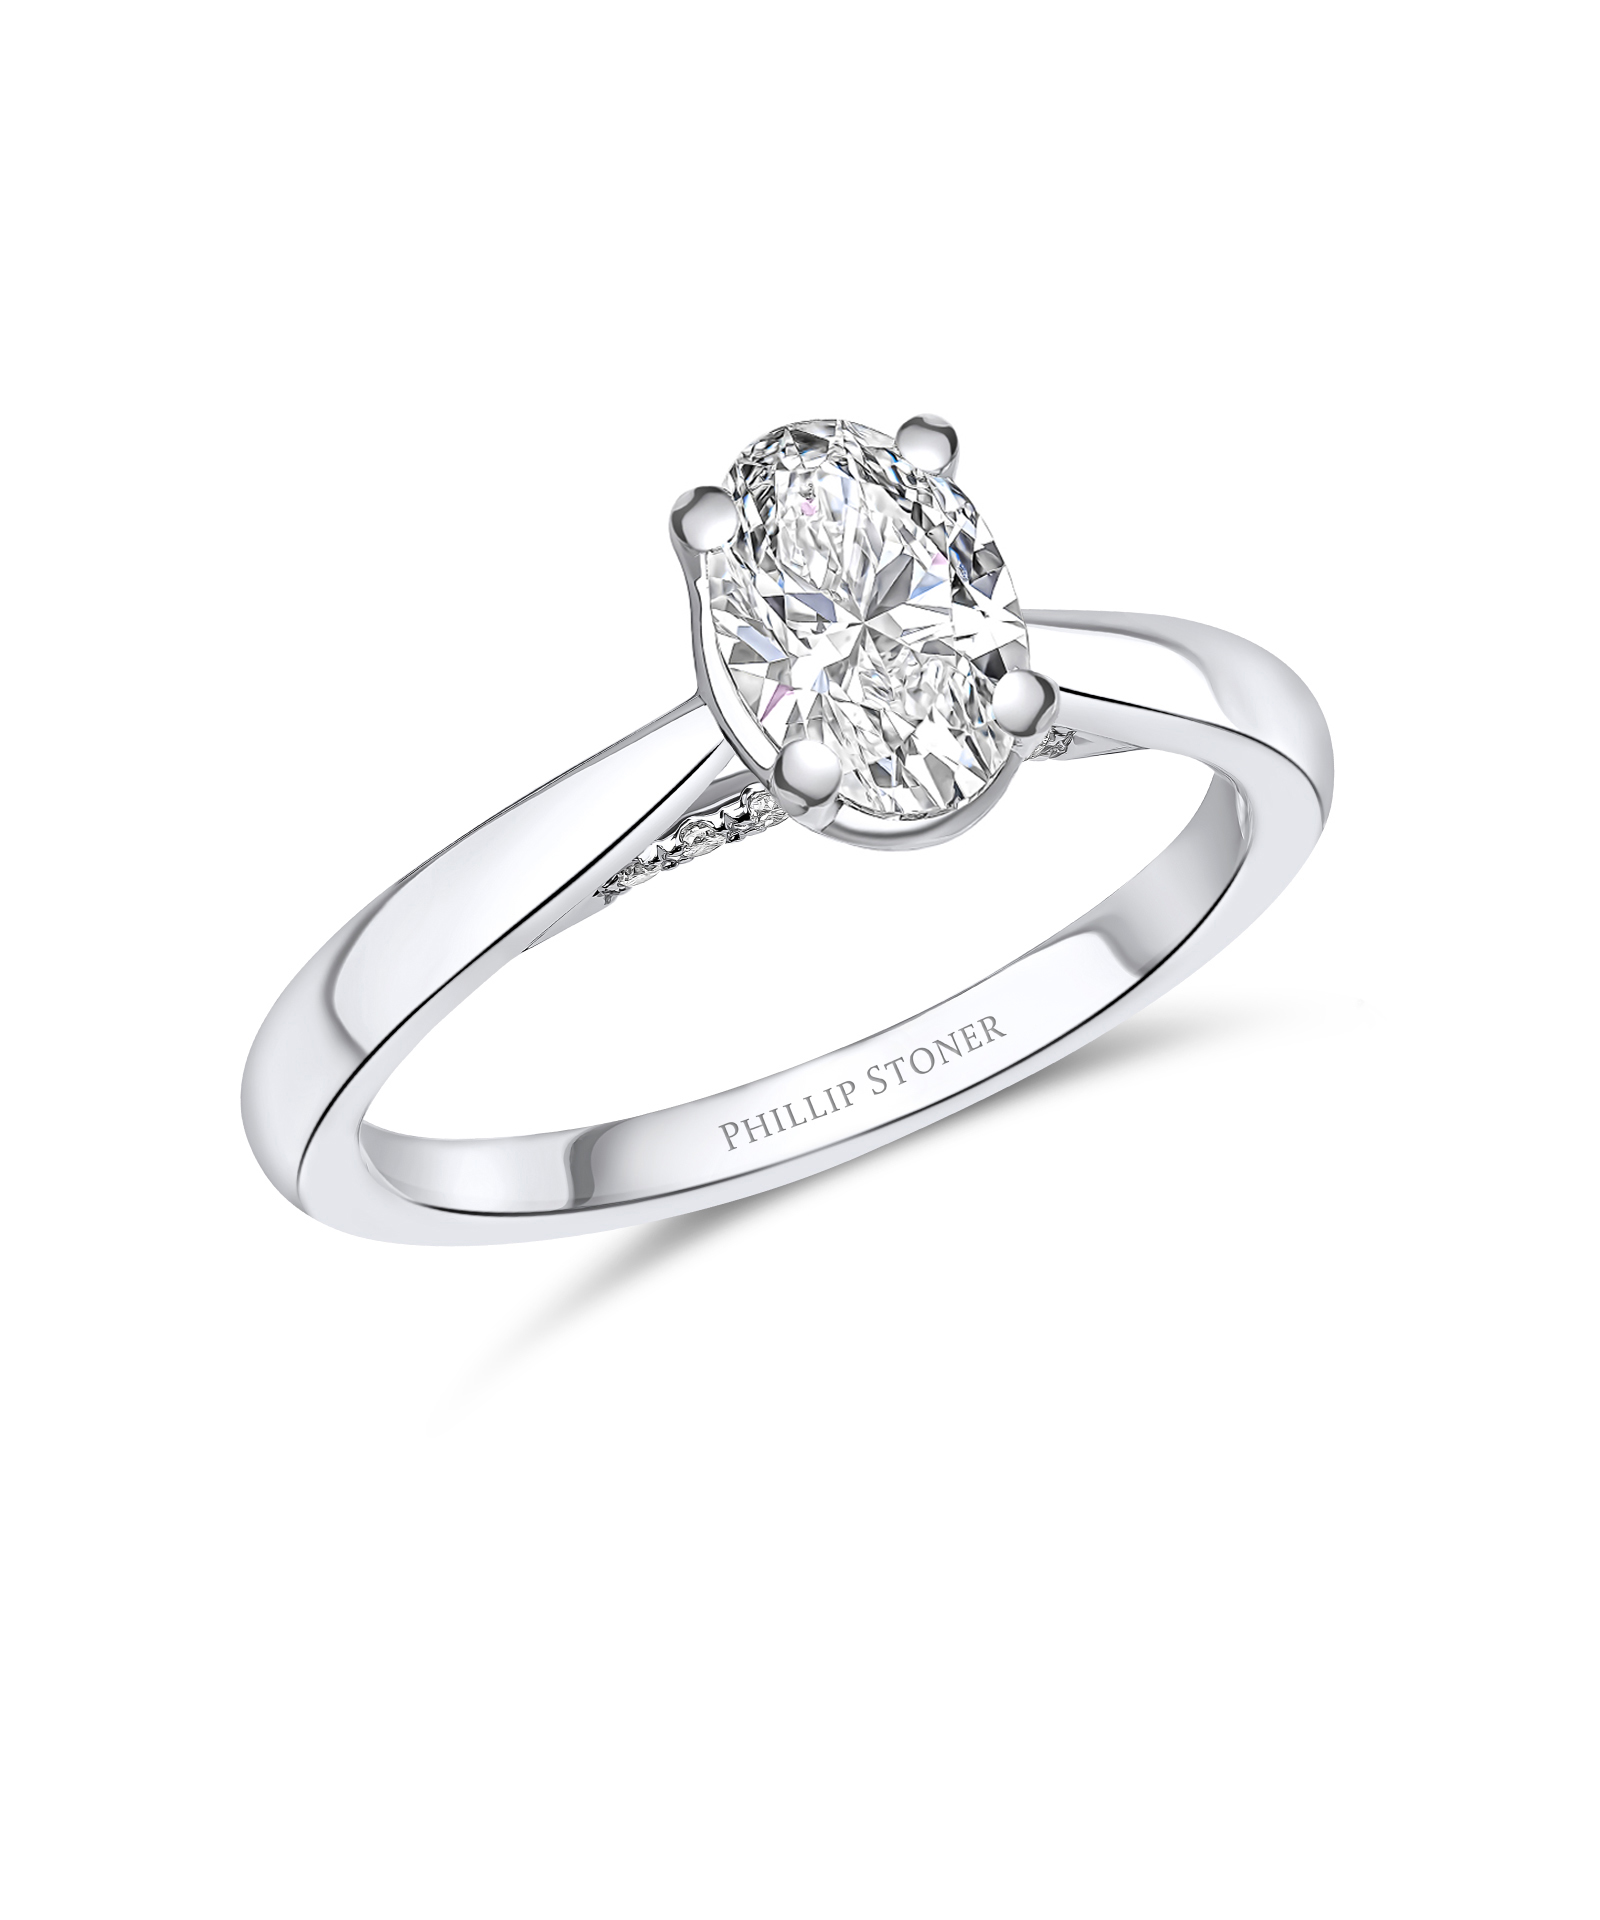 1ct Oval Diamond Engagement Ring with Diamond Under Bezel - Phillip Stoner The Jeweller